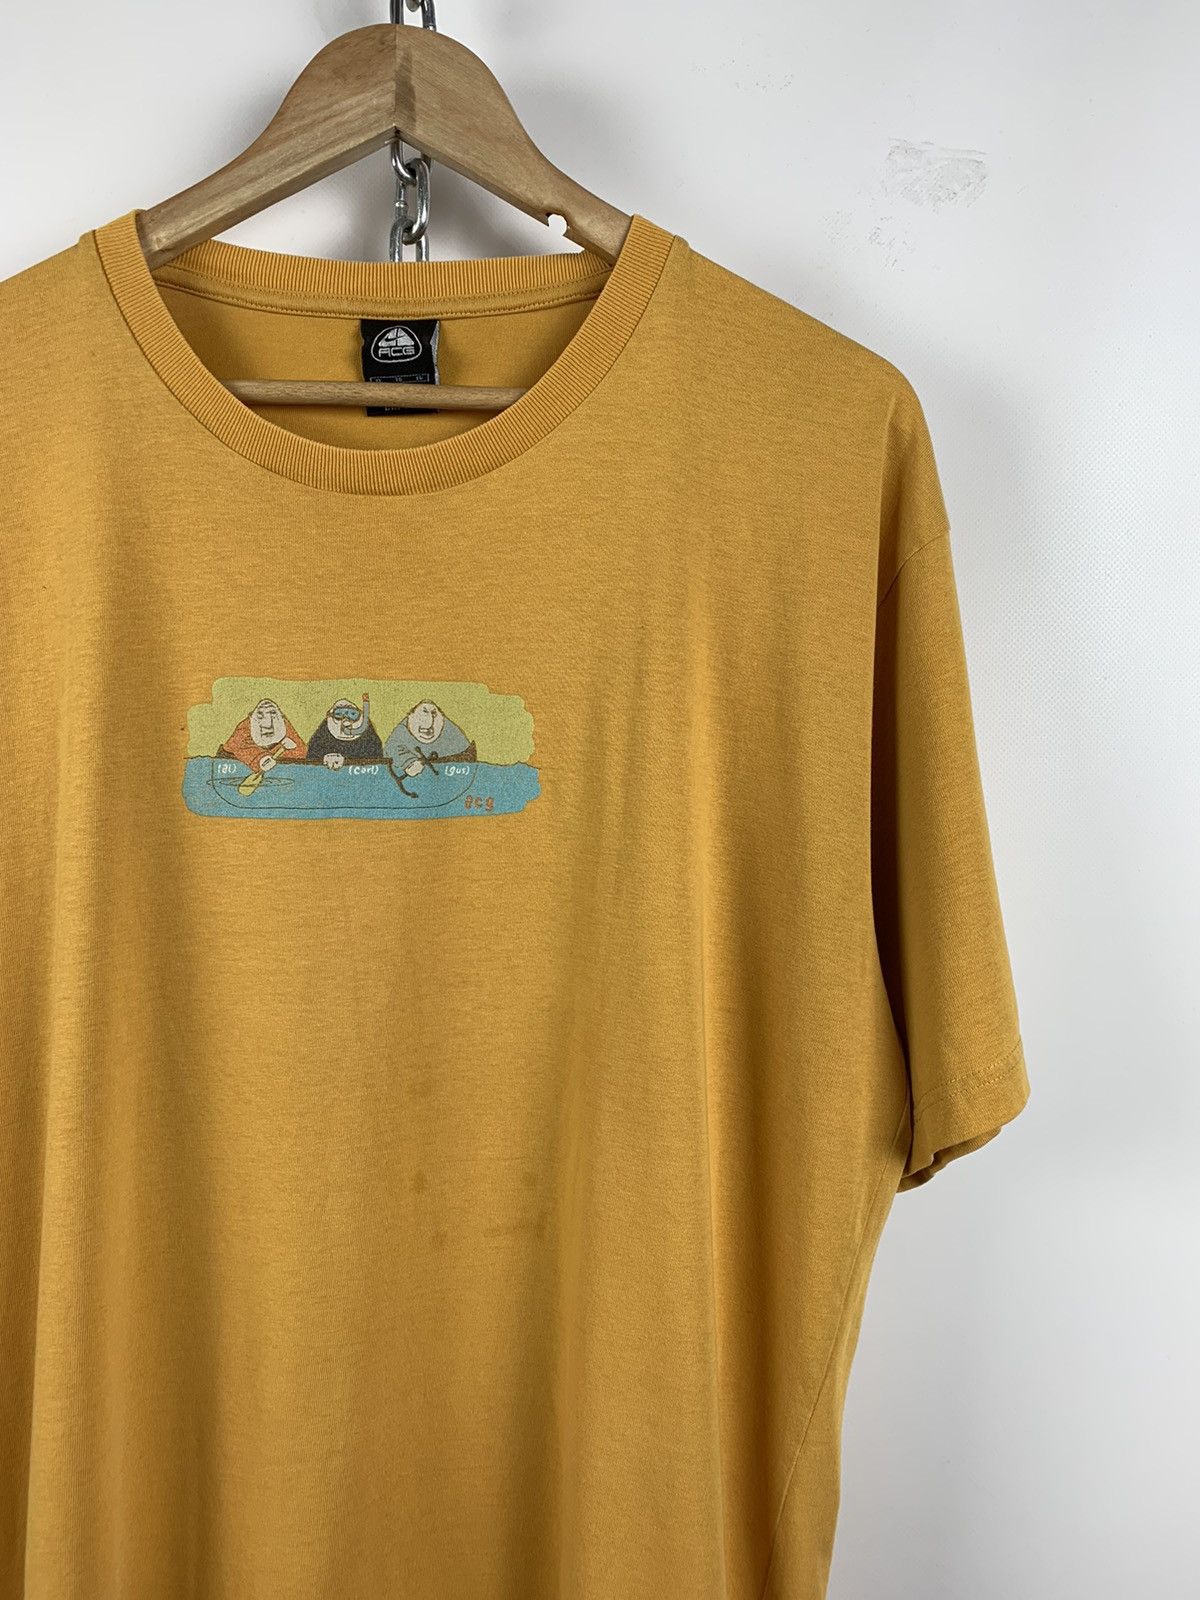 Nike 90s Vintage Nike ACG Fishing Boat Yellow T-Shirt